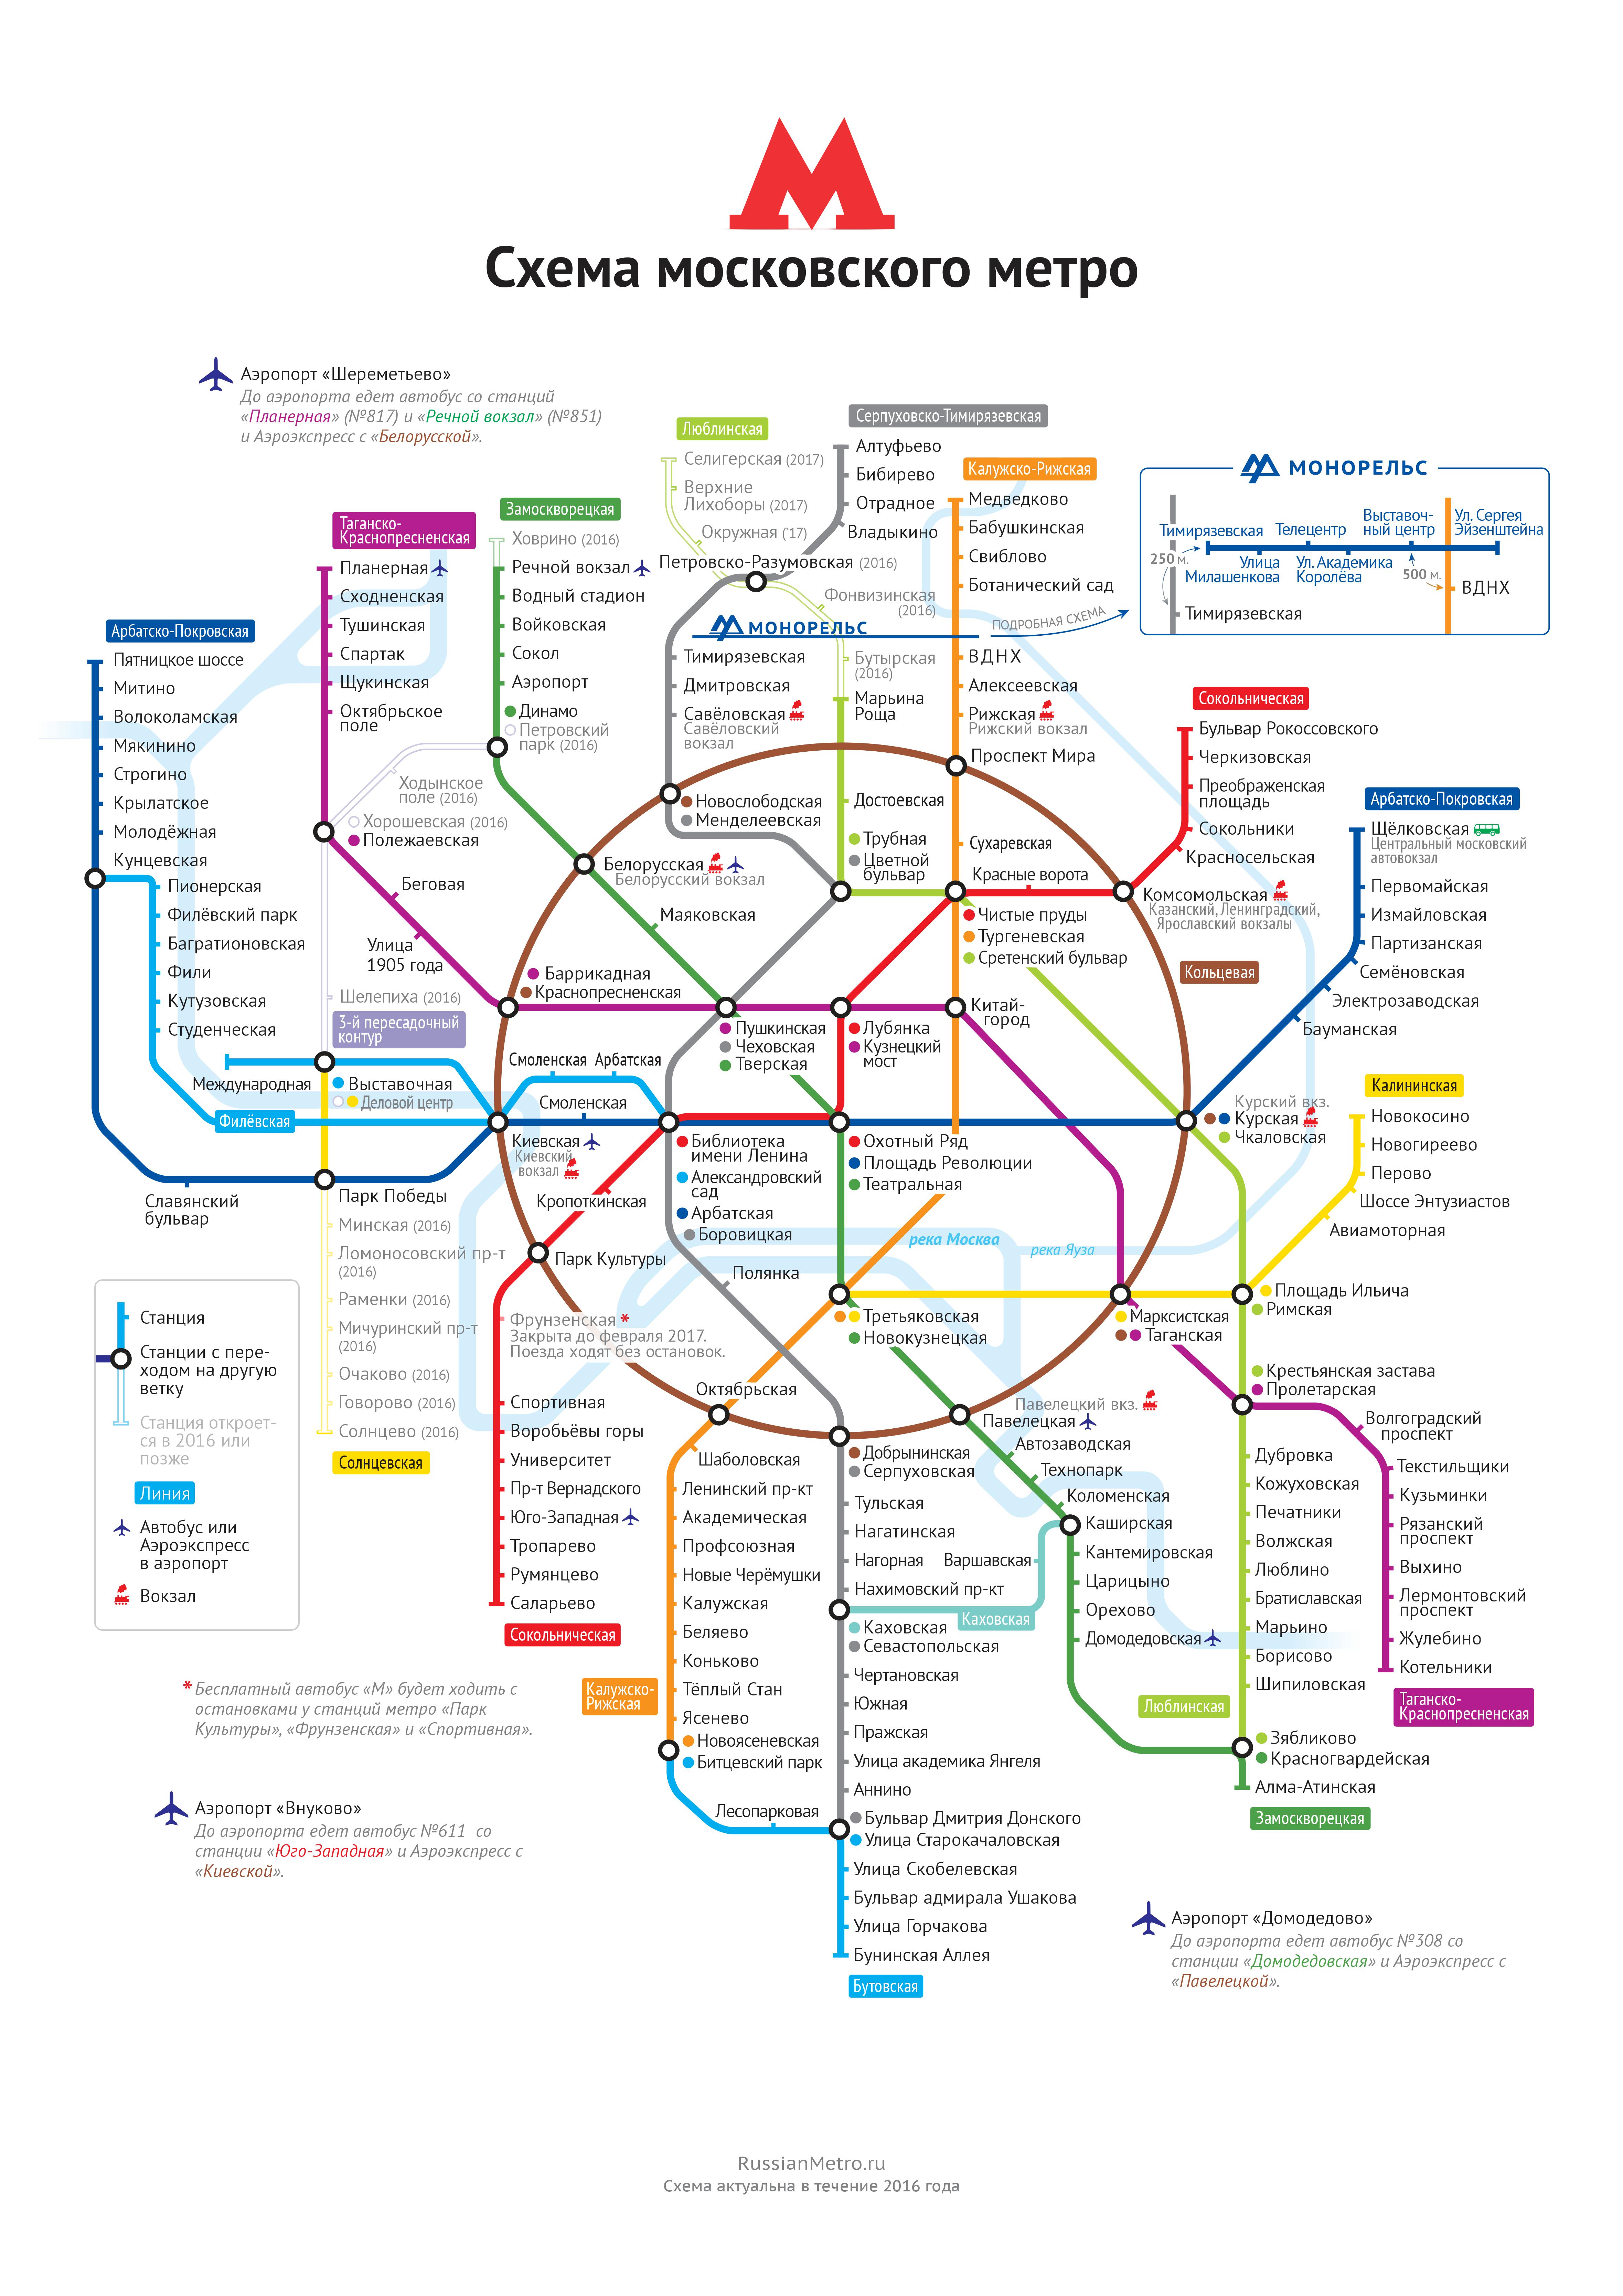 Схема Московского метрополитена. Фото N2